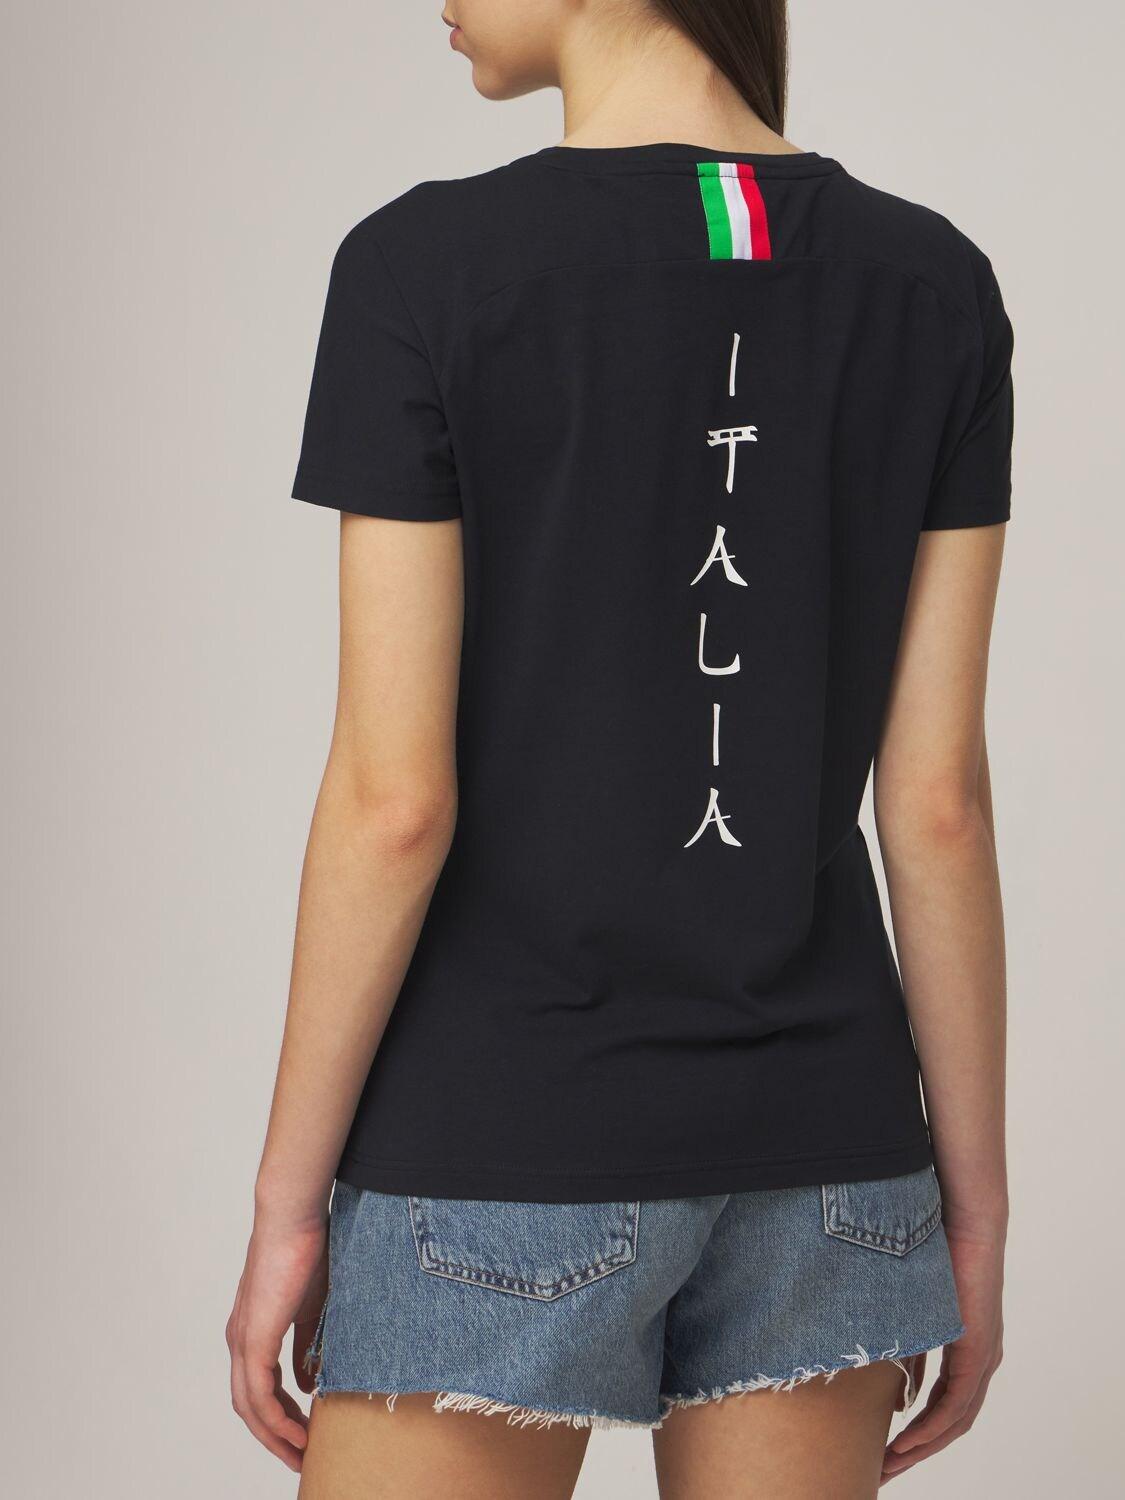 EA7 Italian Olympic Team T-shirt in Black | Lyst